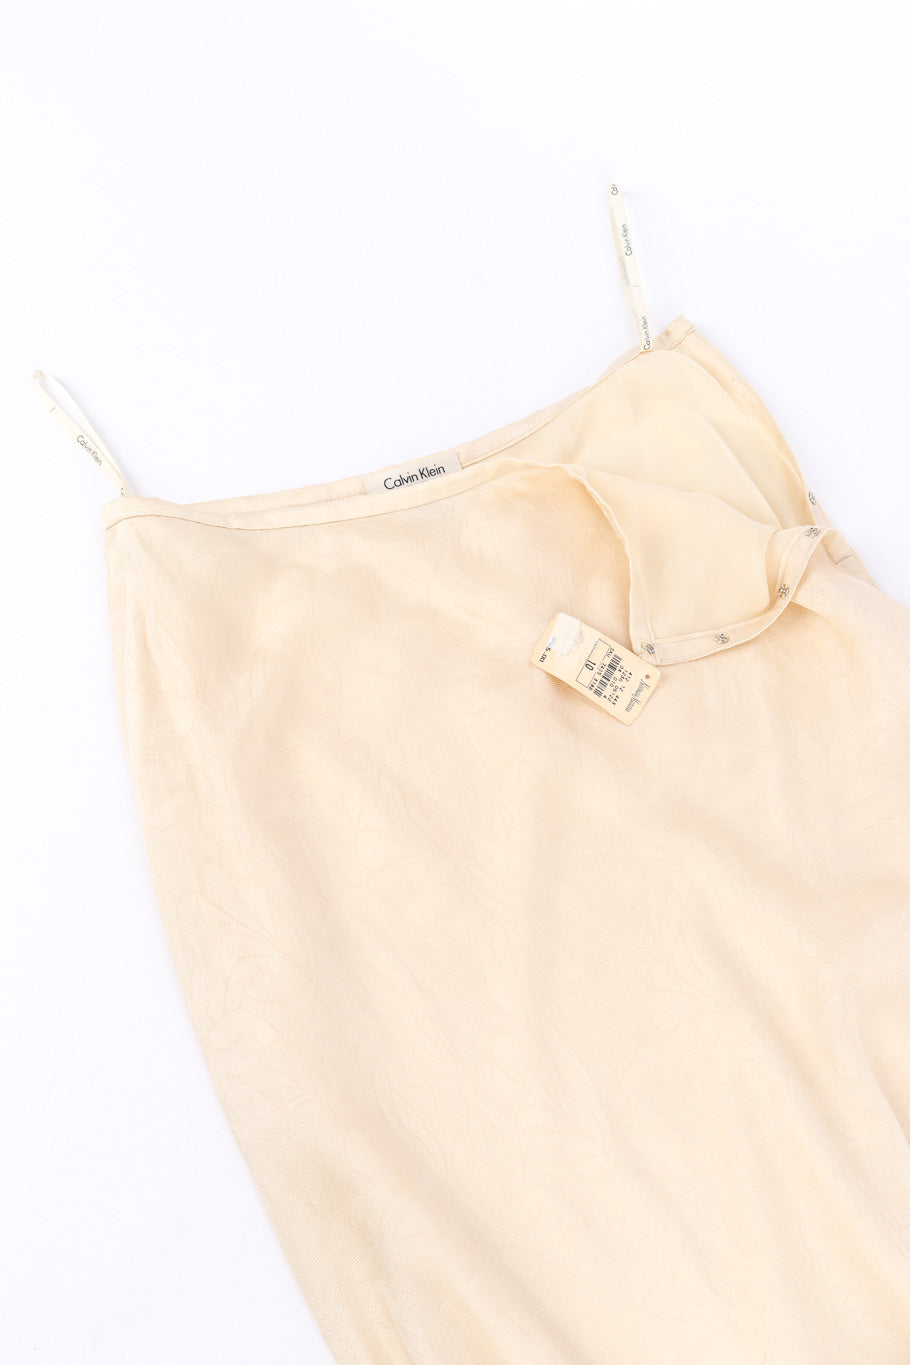 Tank top and skirt set by Calvin Klein skirt un snapped @recessla